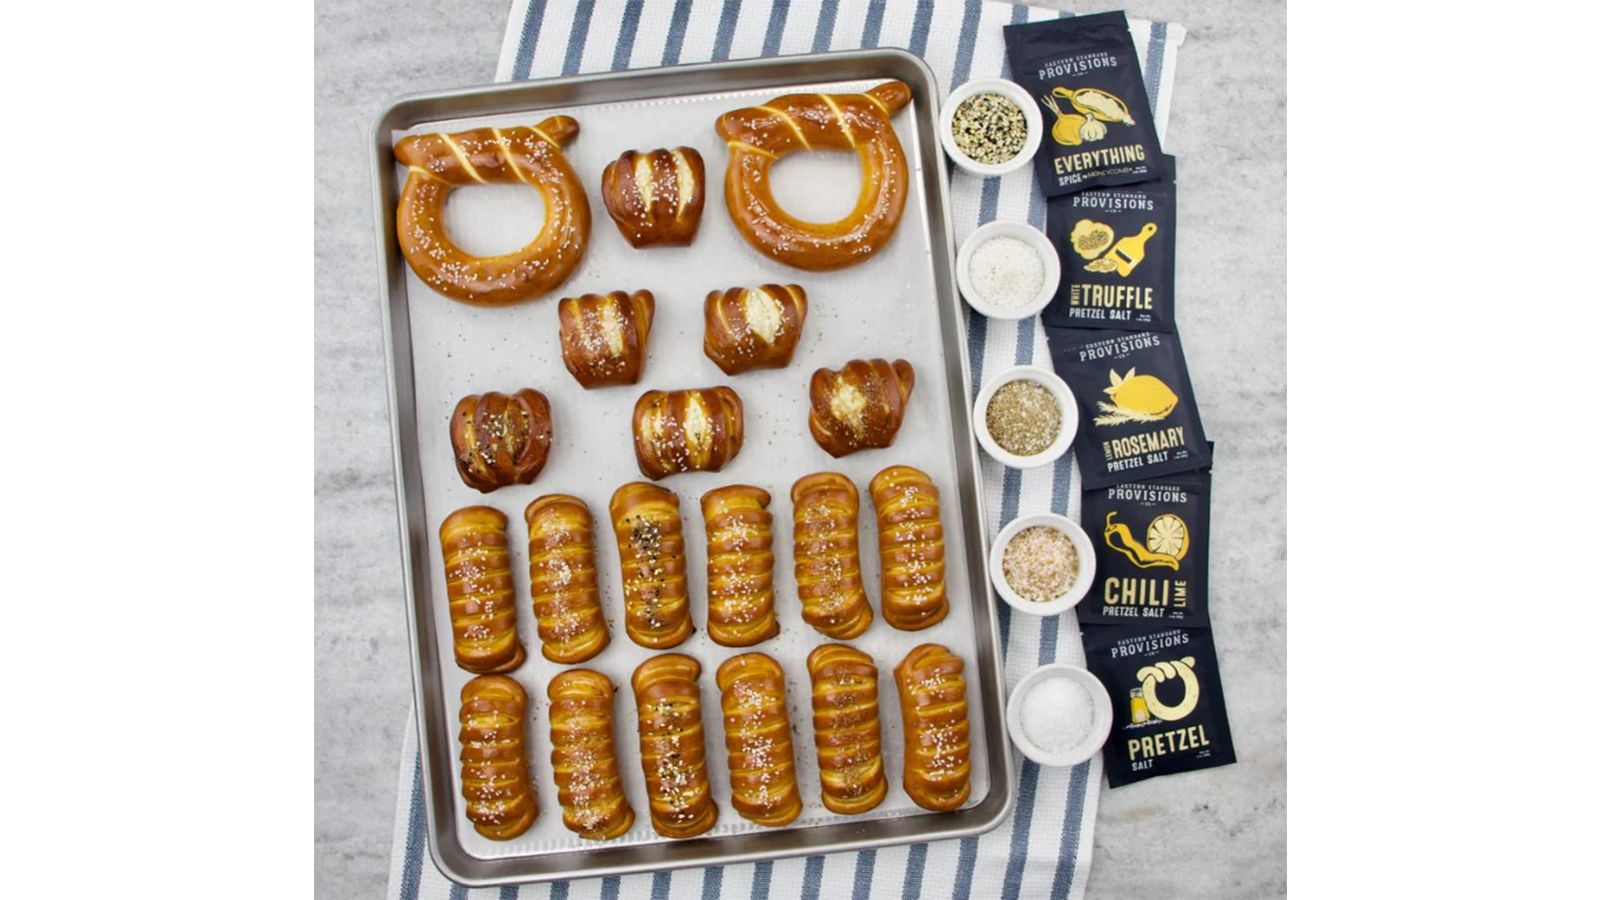 https://media.cnn.com/api/v1/images/stellar/prod/food-gifts-pretzels.jpg?q=h_900,w_1600,x_0,y_0